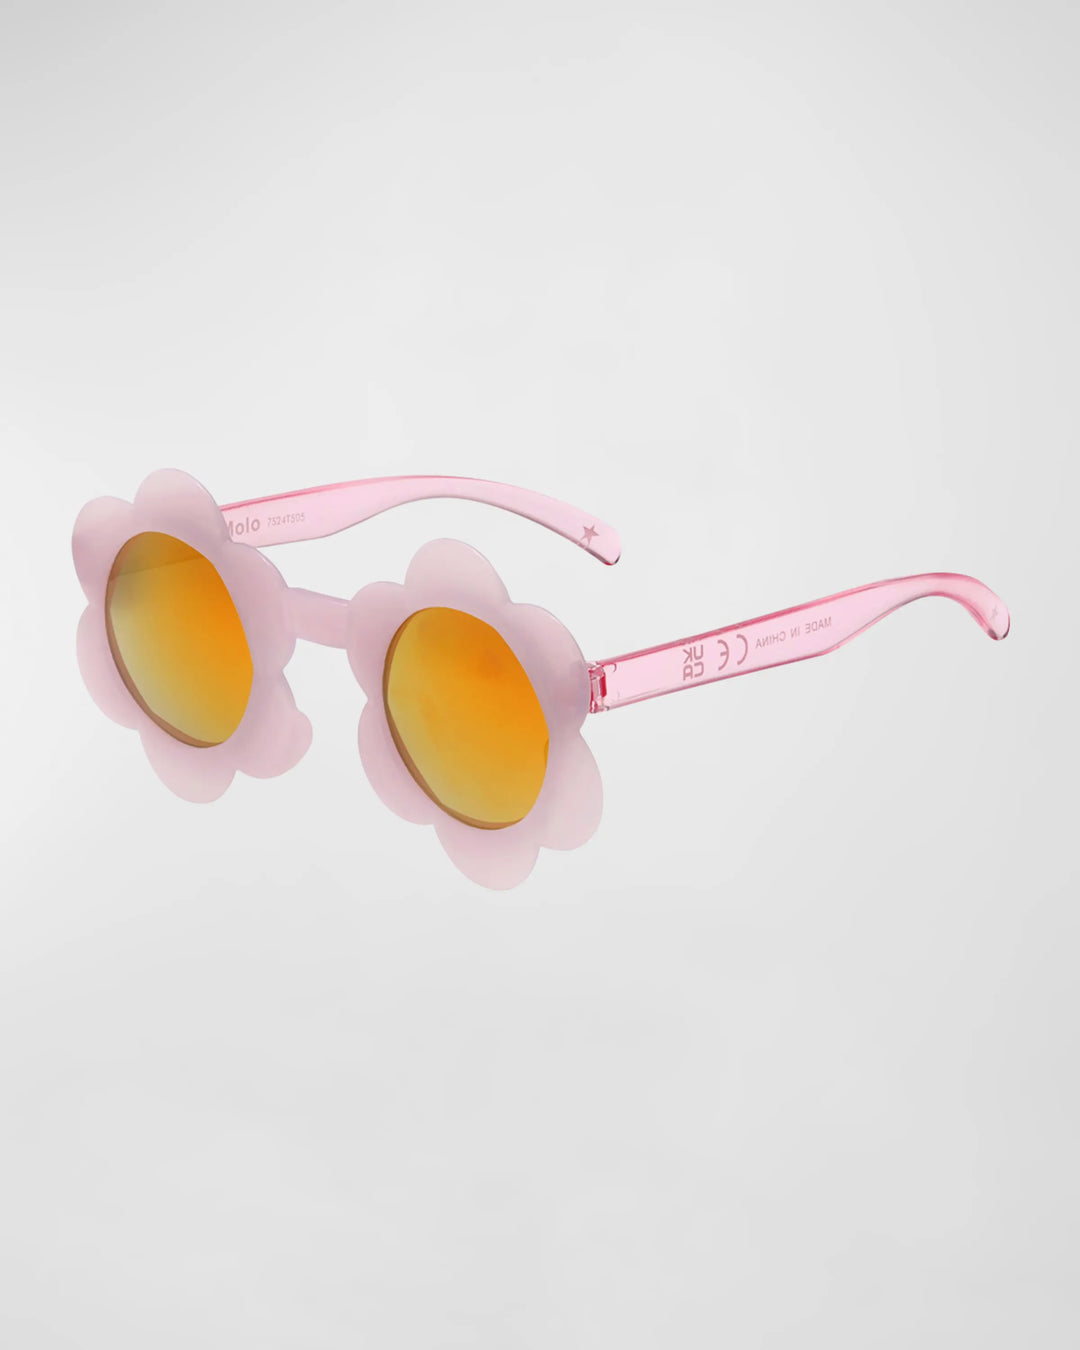 Soleil Sunglasses  by Molo